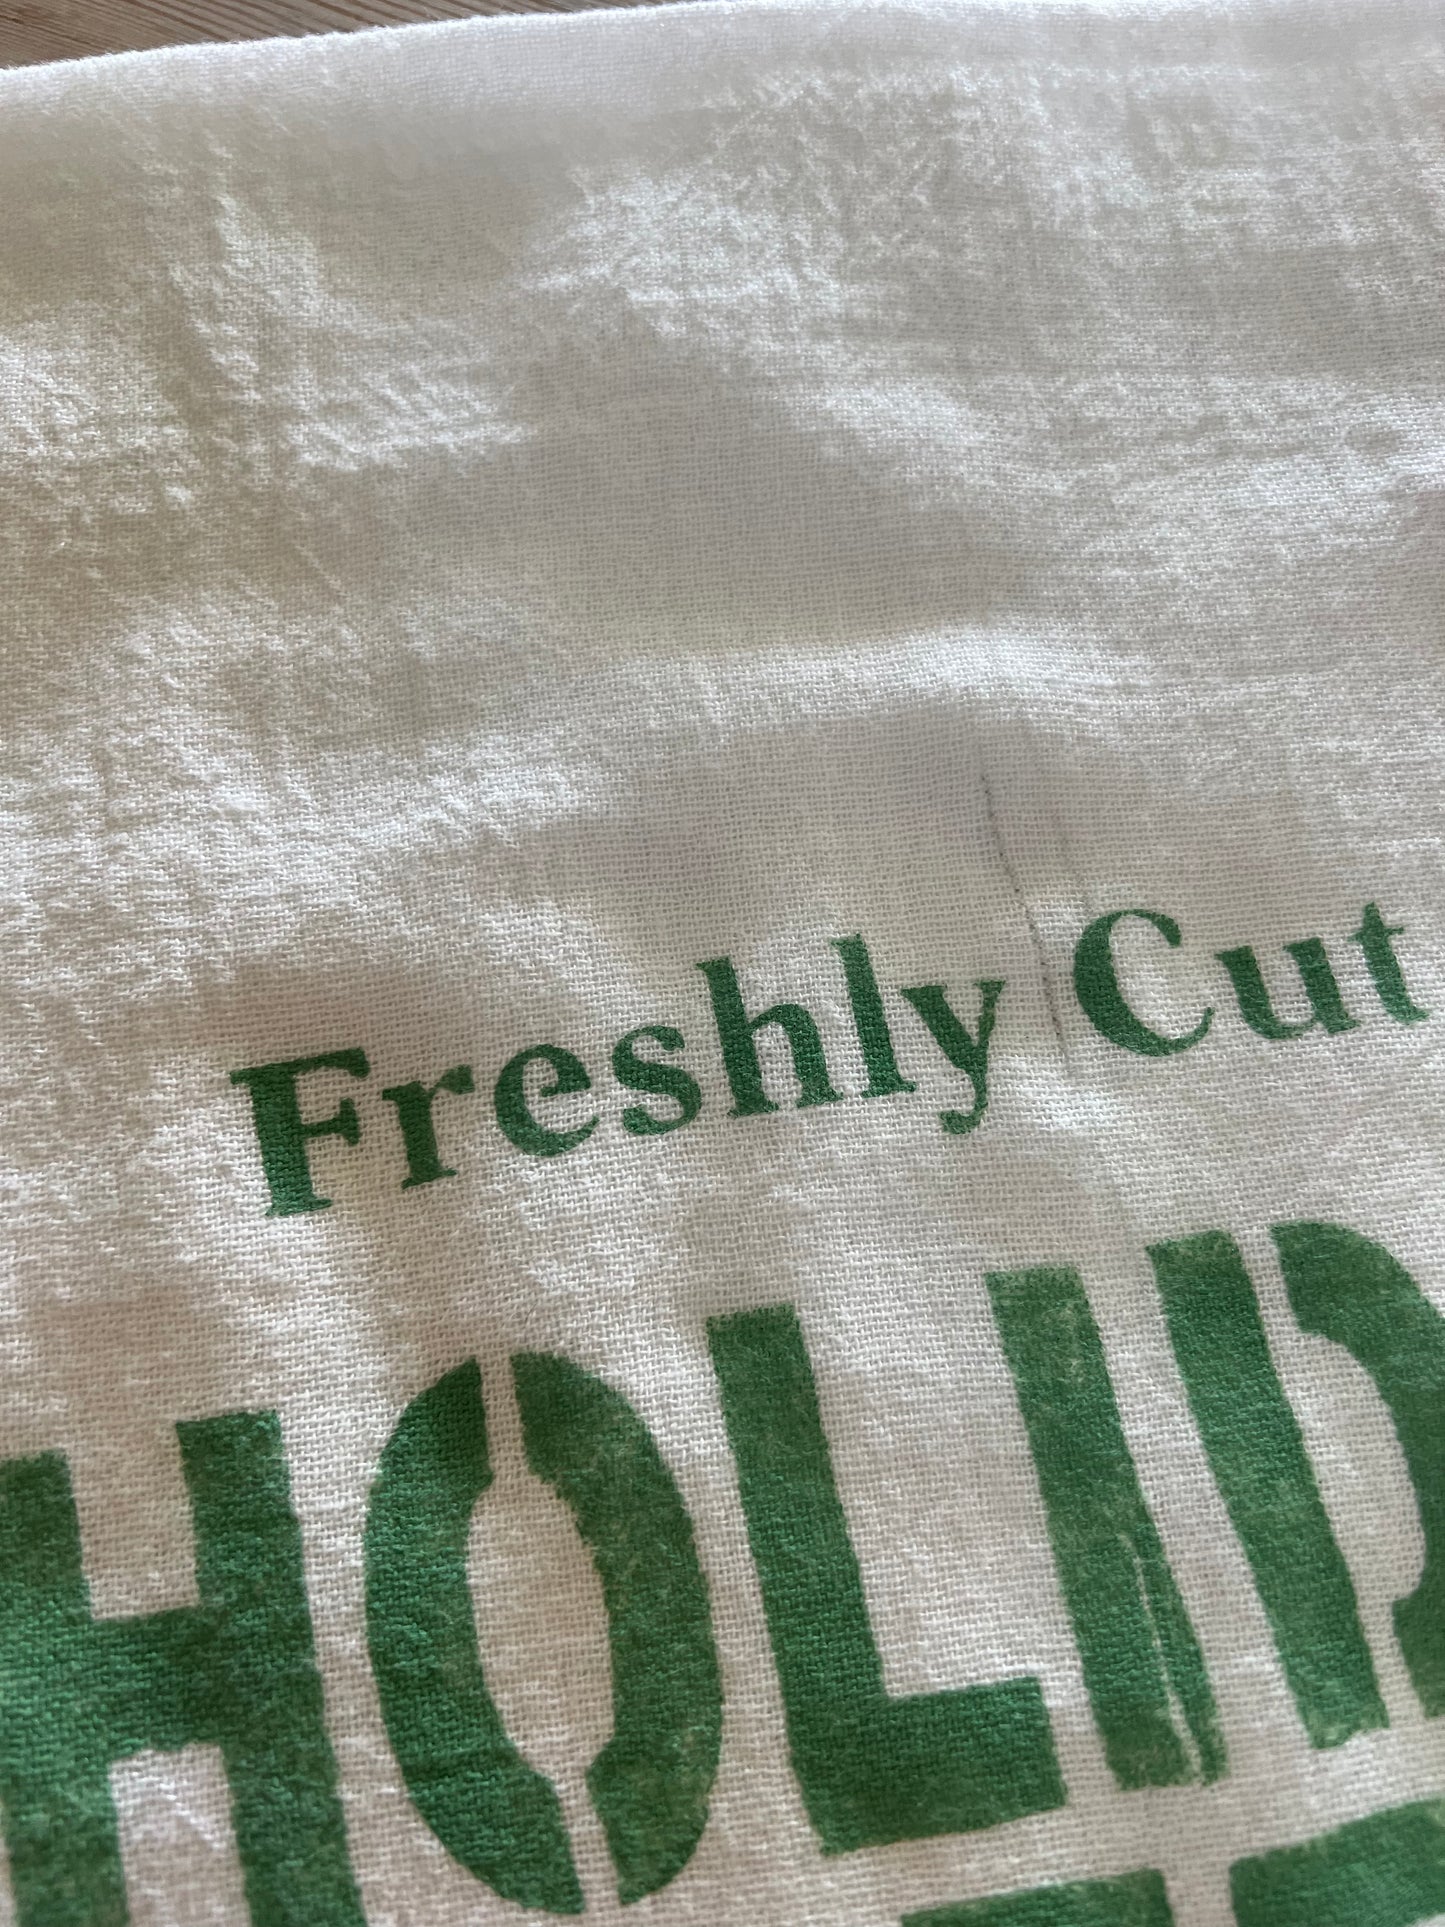 Holiday Greens Hand Stenciled Flour Sack towel